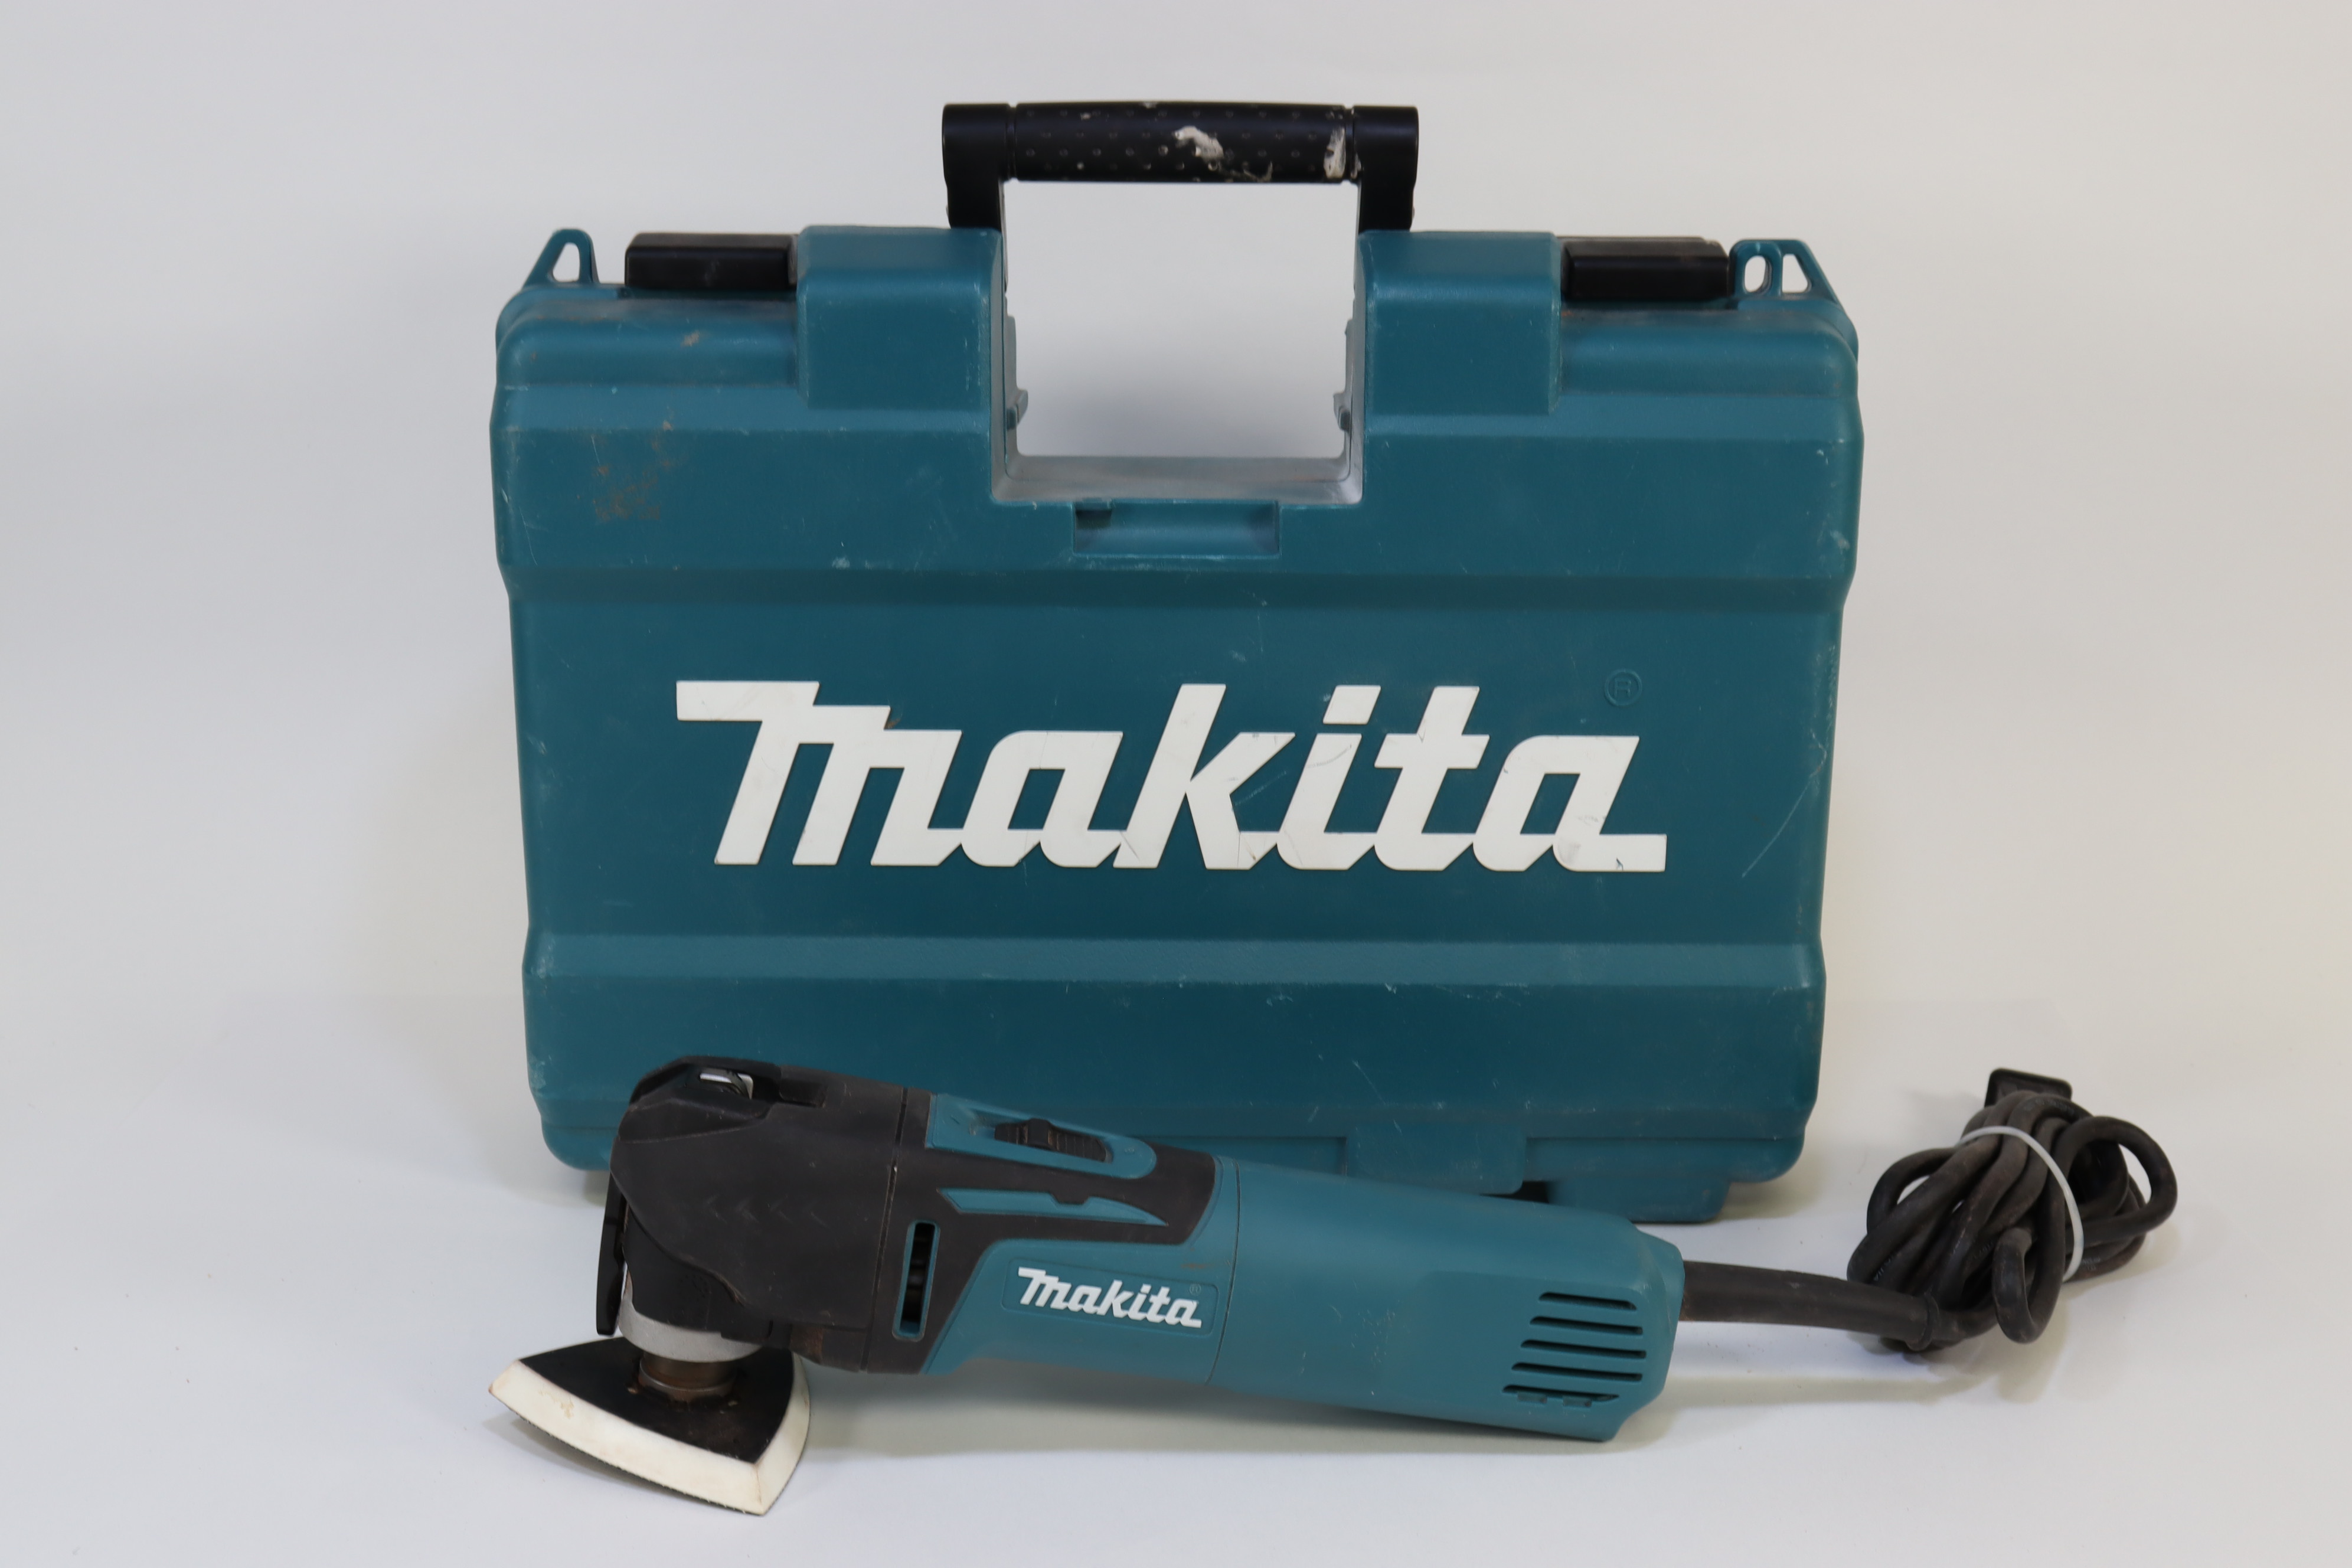 New Makita Oscillating Multi-Tools!